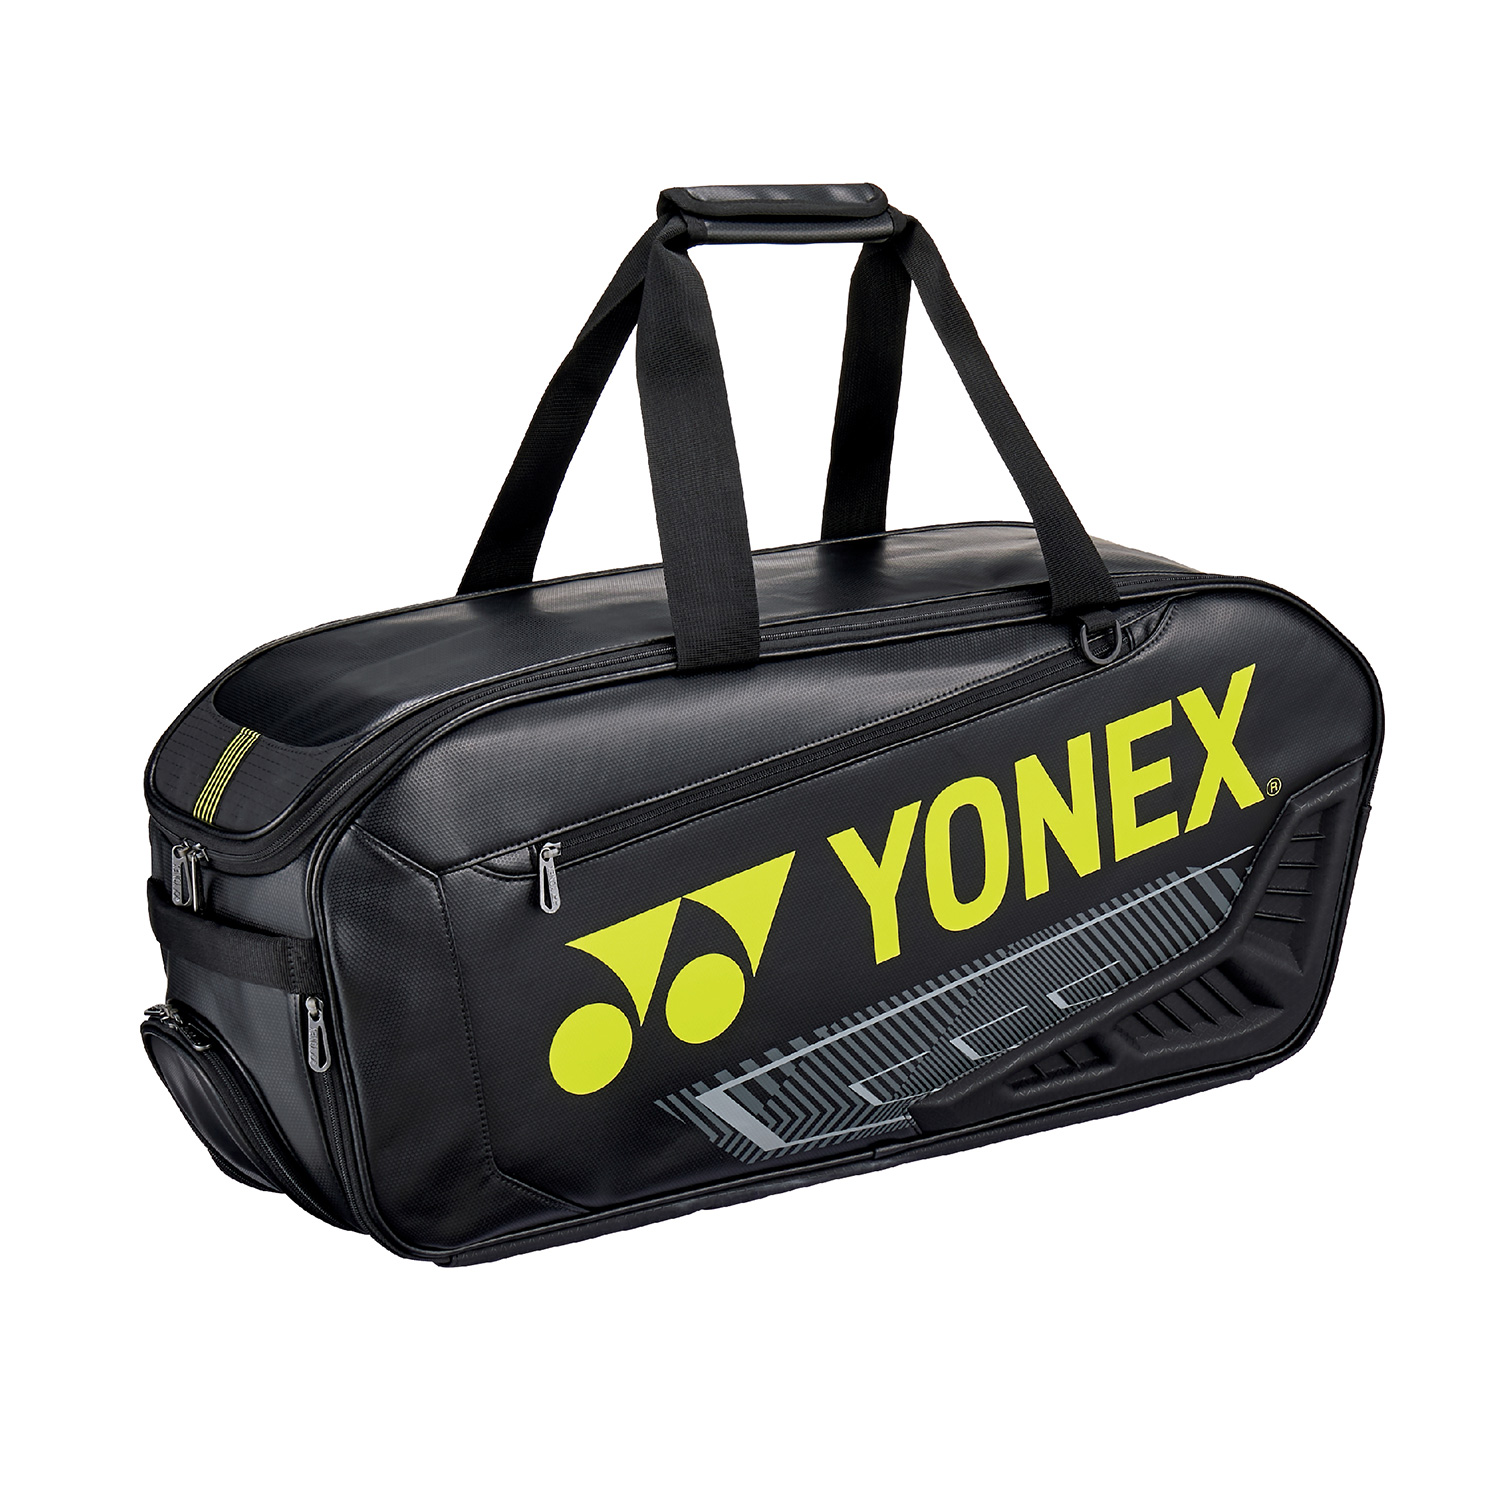 Yonex Expert Tournament Borsone - Black/Yellow